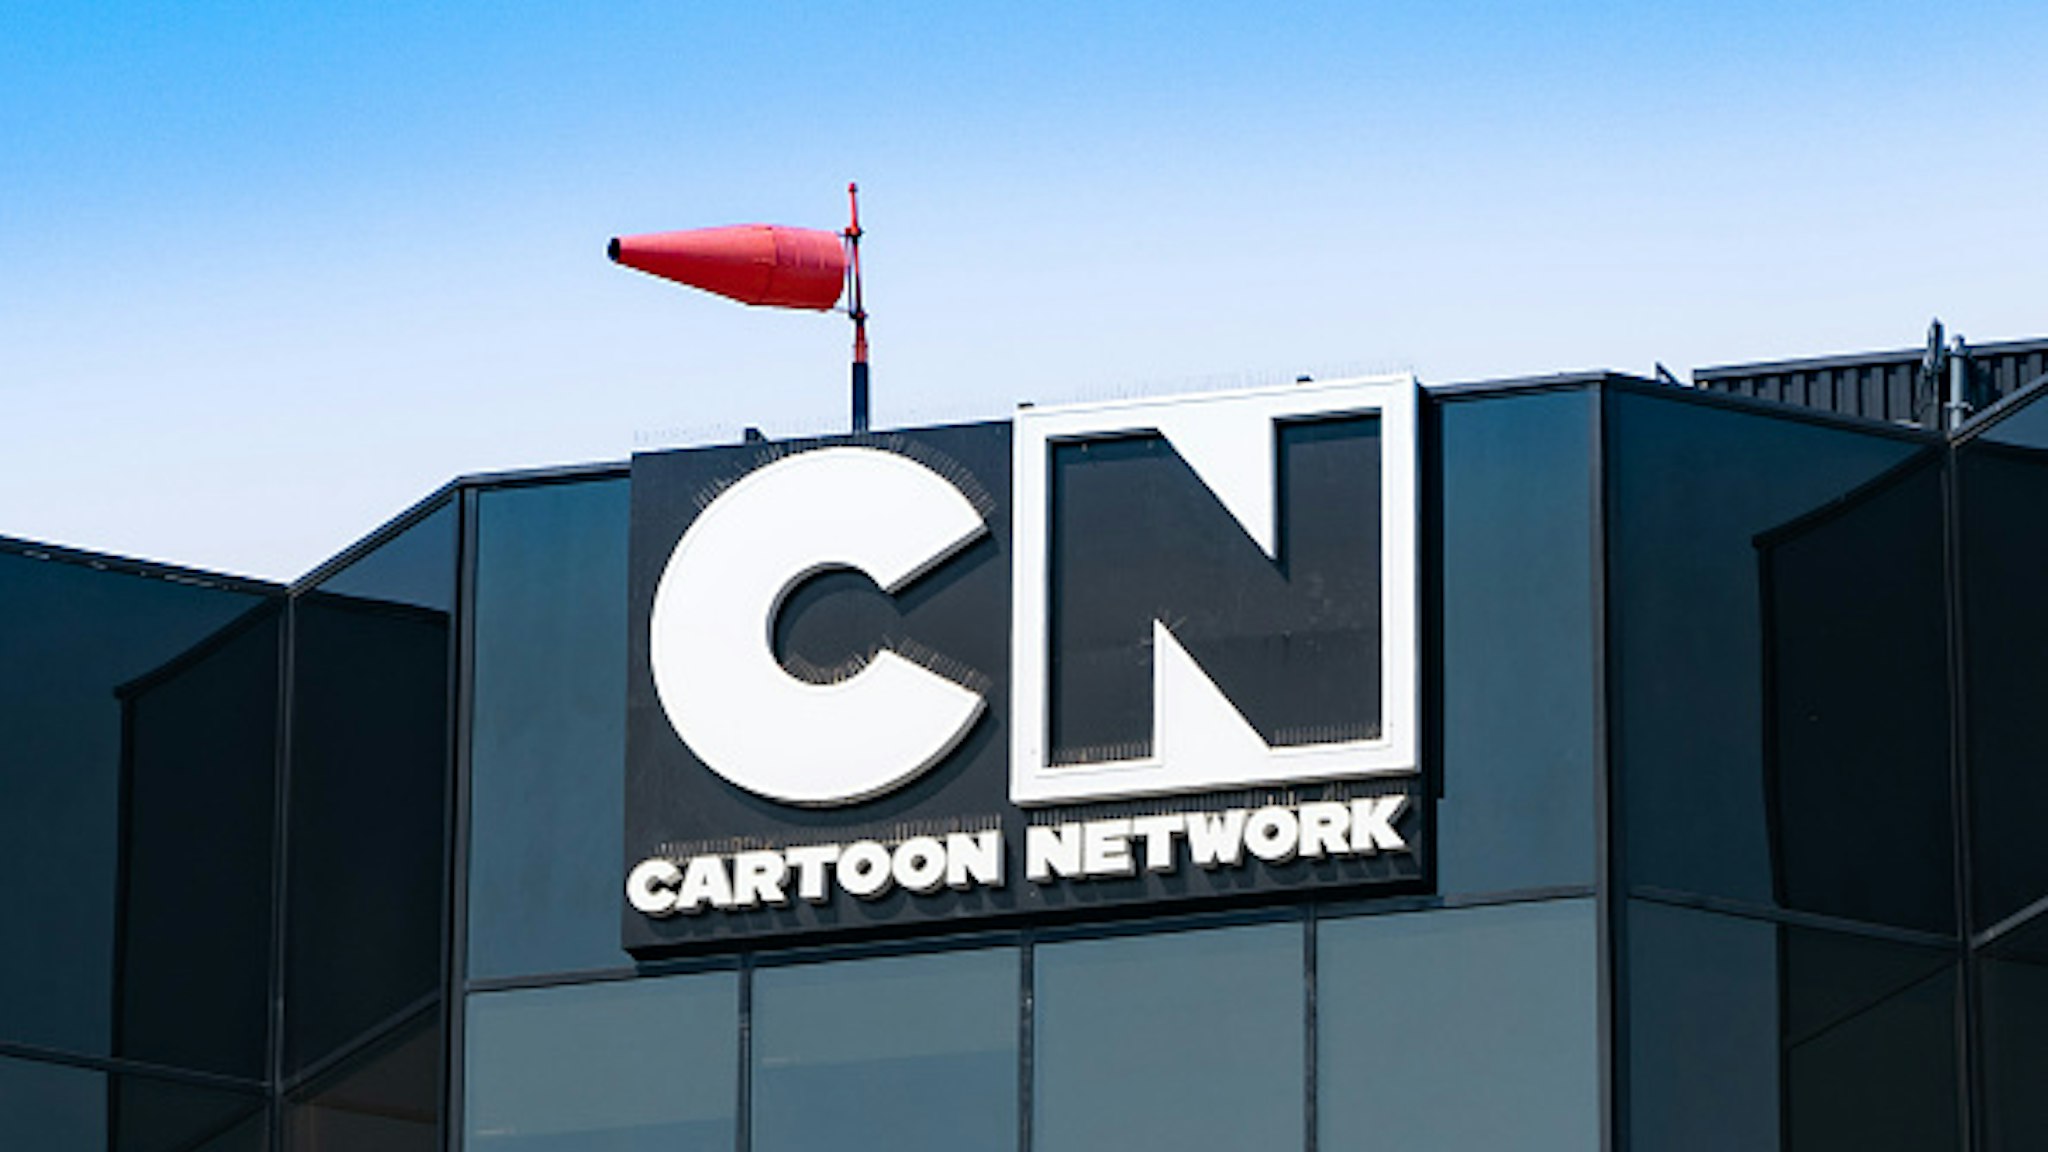 BURBANK, CA - AUGUST 19: General view of the Cartoon Network studio headquarters on August 19, 2020 in Burbank, California.